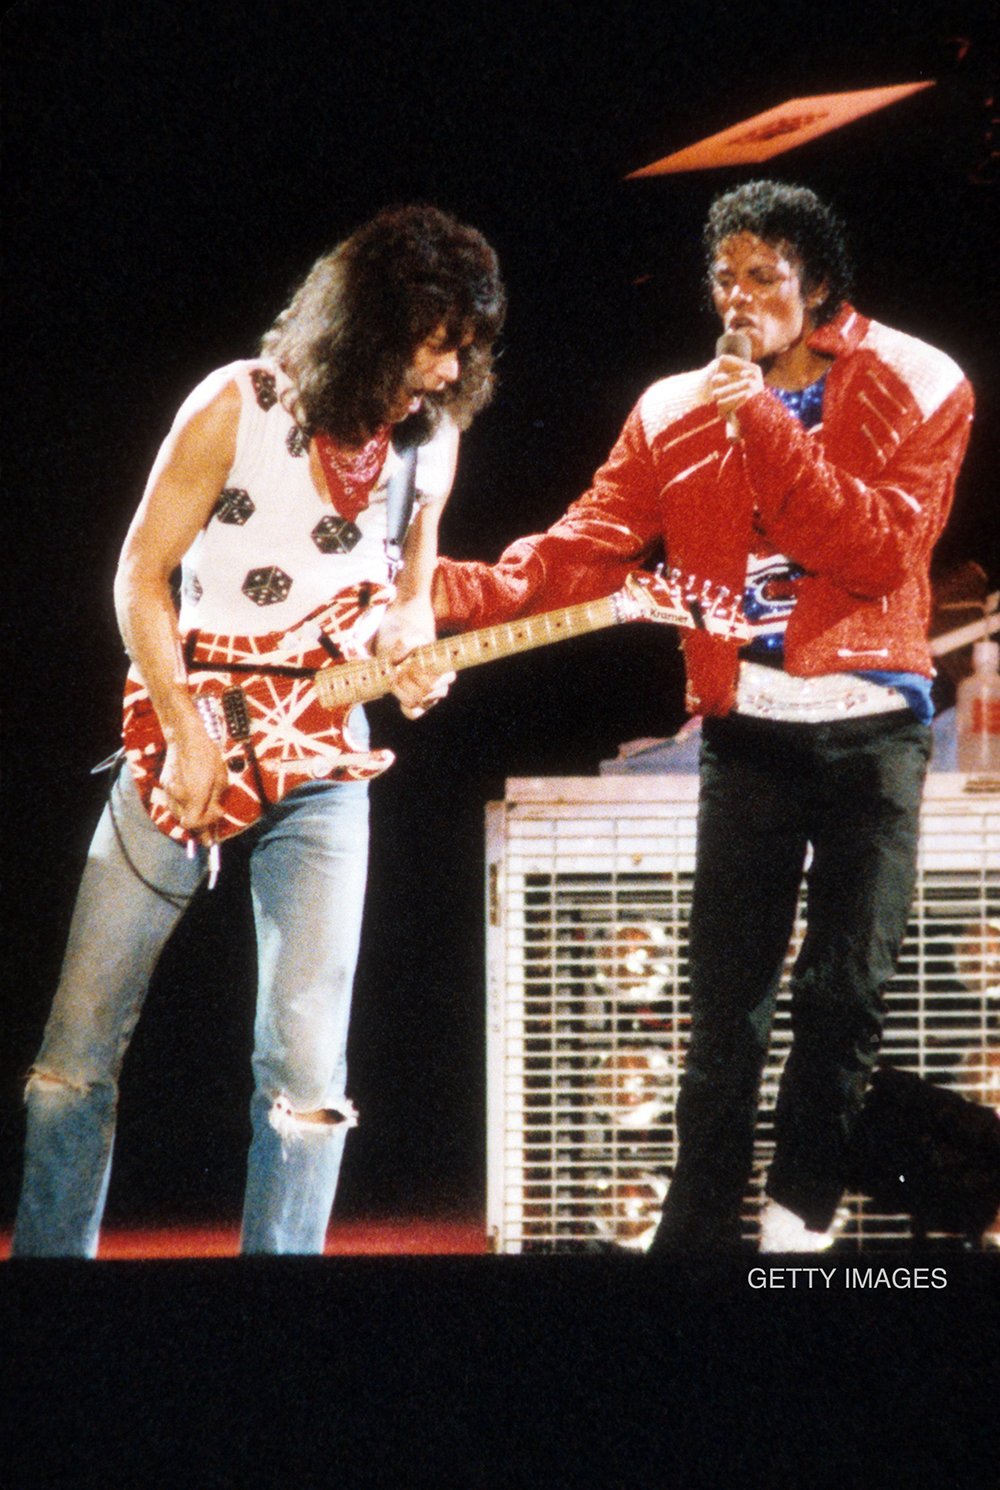 MJ On Eddie Van Halen’s Work On ‘Beat It’